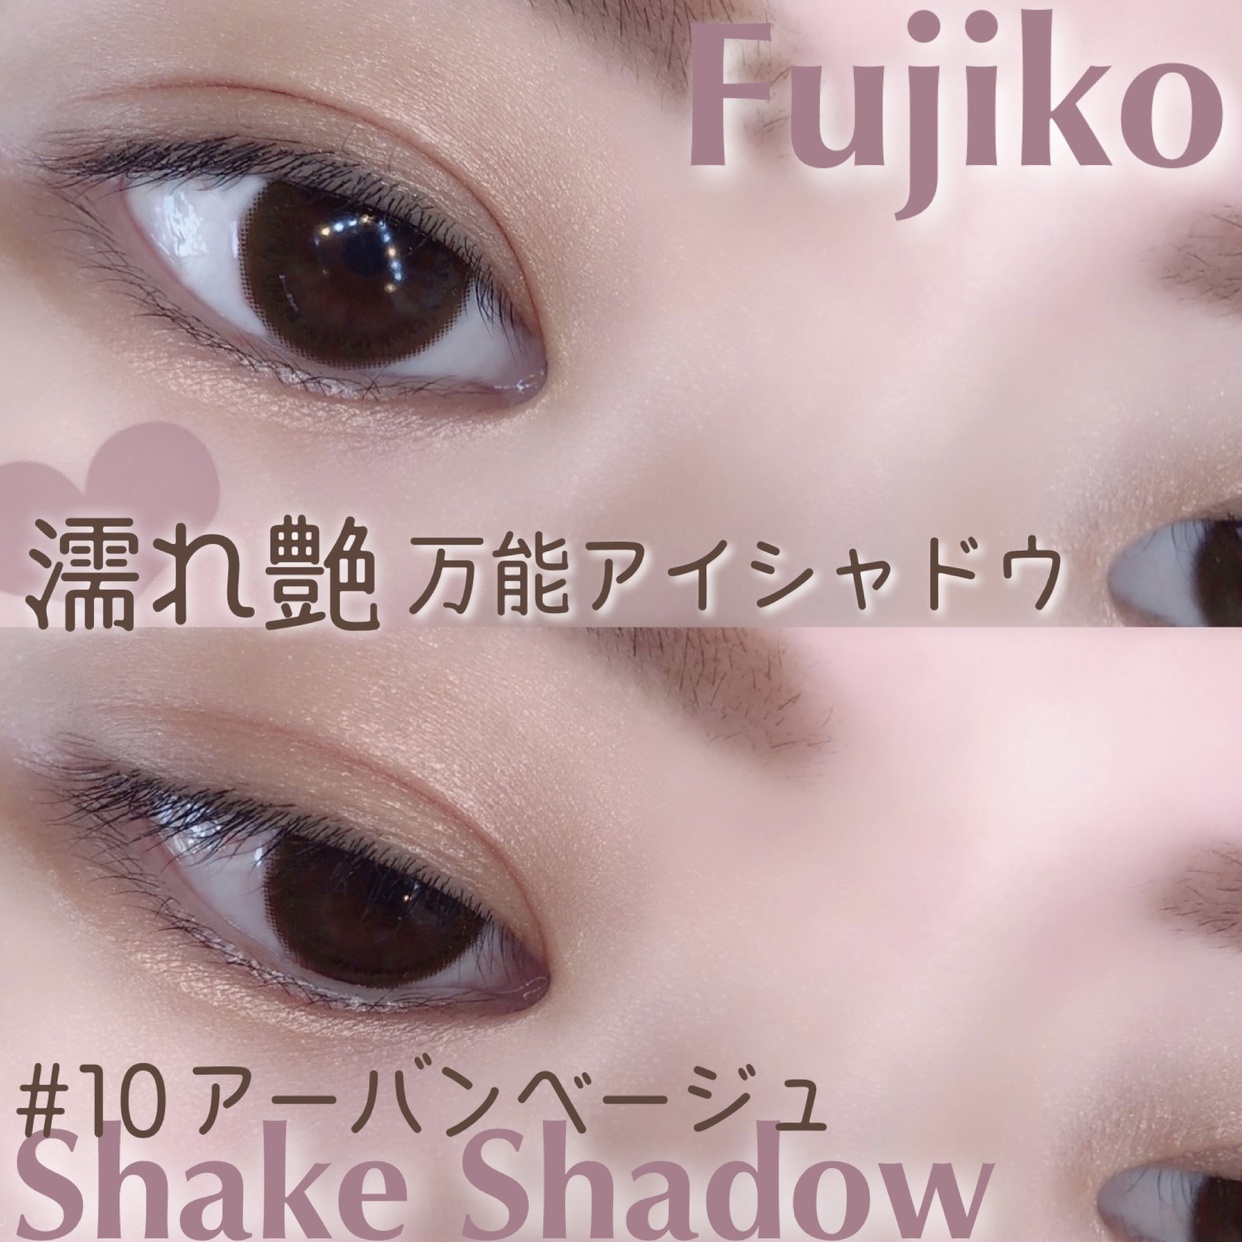 Fujiko(フジコ) シェイクシャドウを使ったsatomiさんのクチコミ画像1